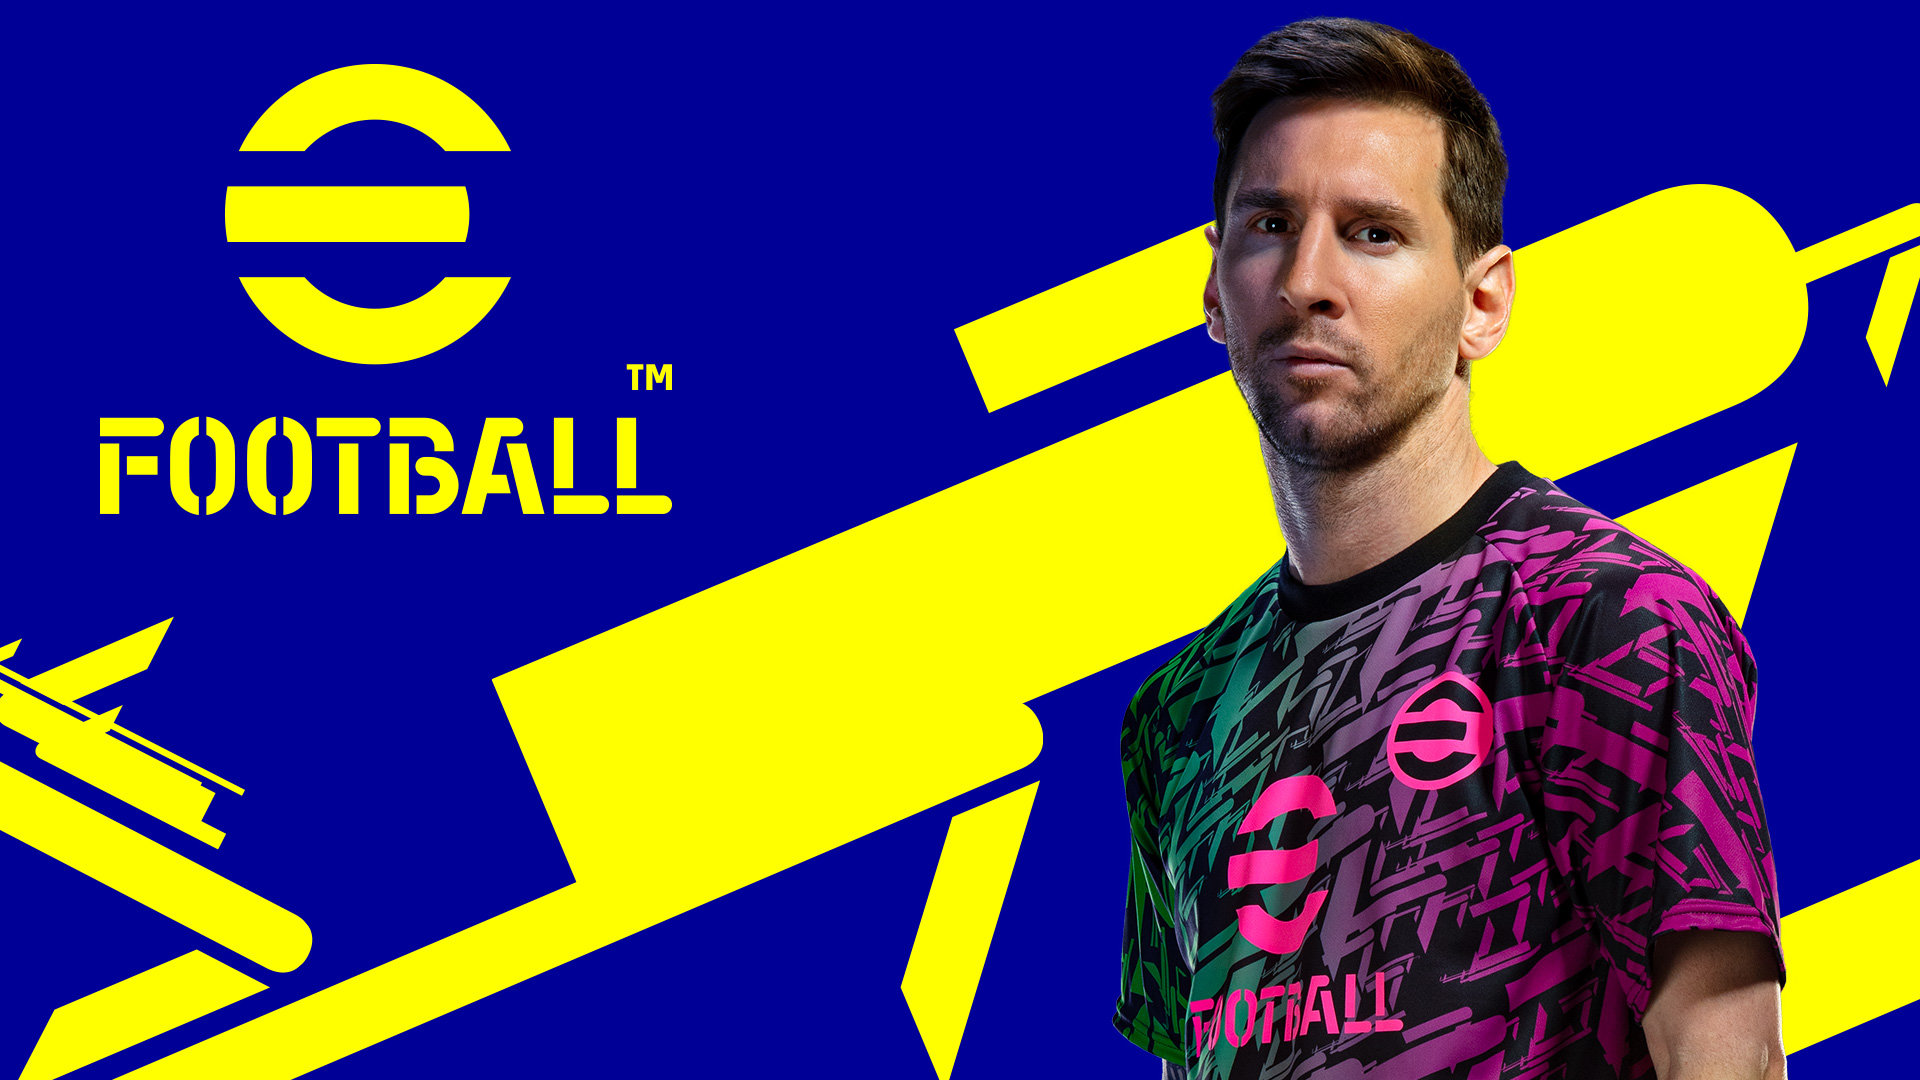 download efootball 2022 platforms for free